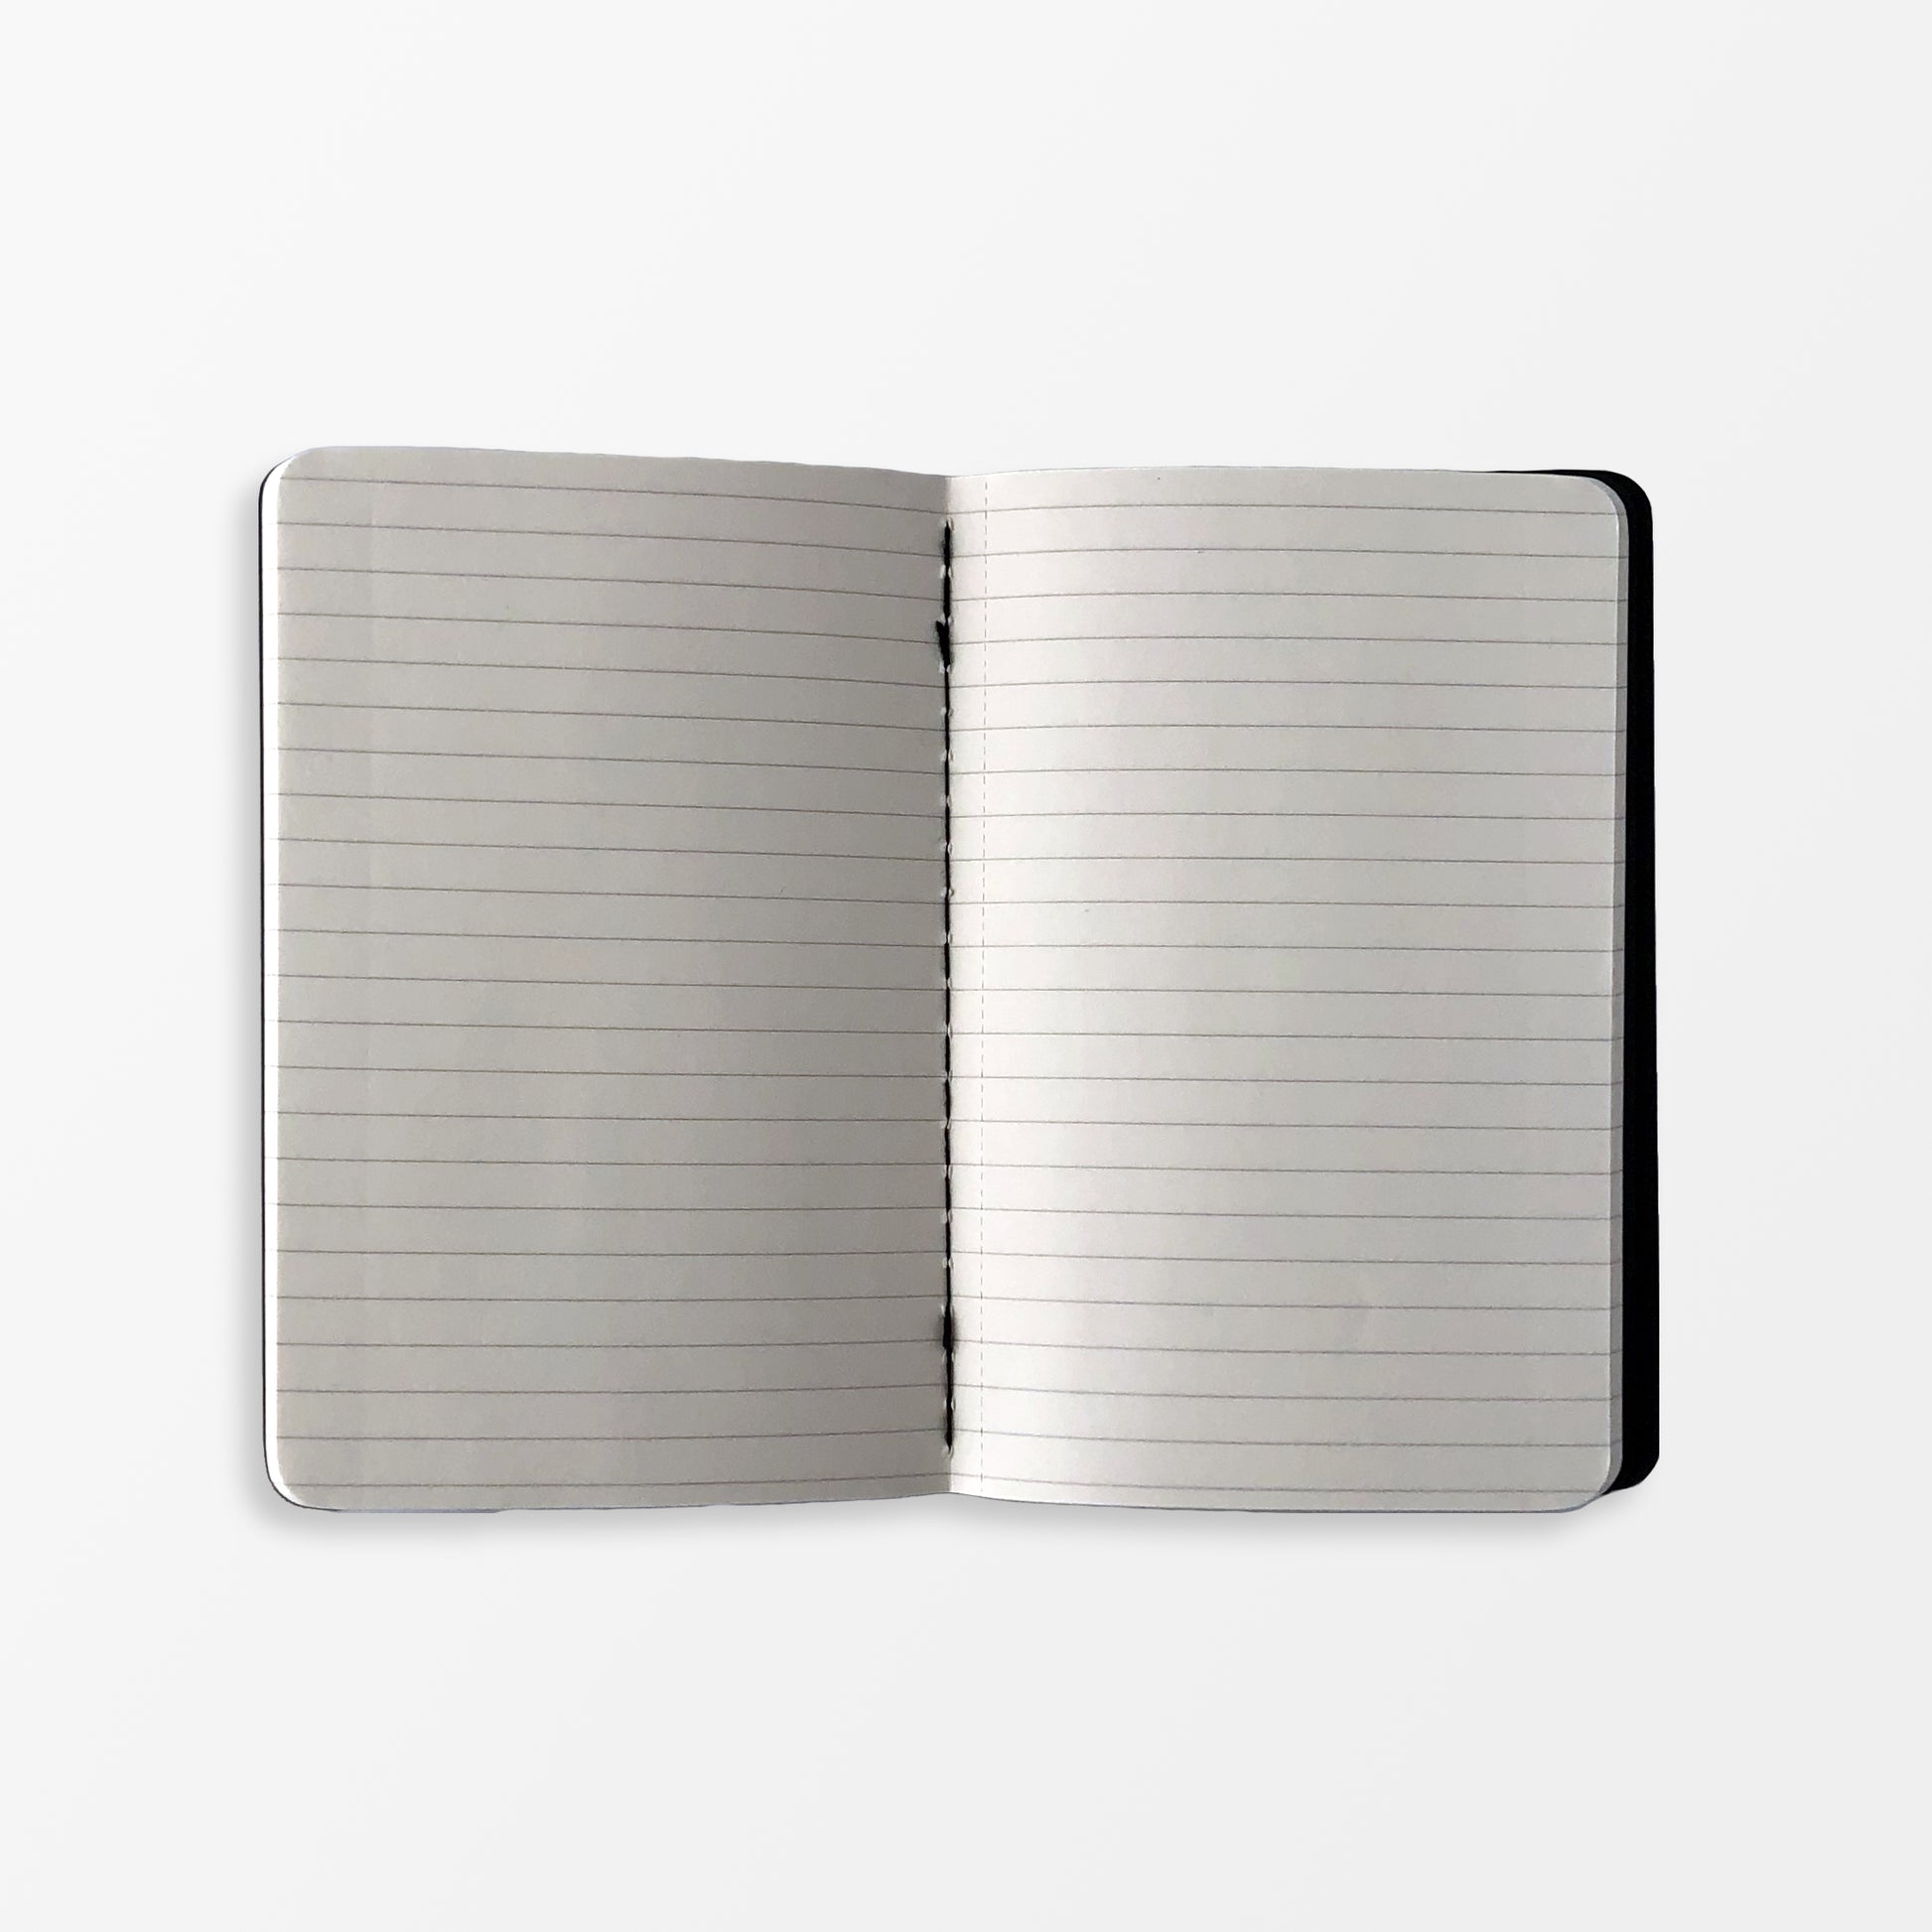 A6 Single Pocket Pioneer Black Notebook - Grierson Studio